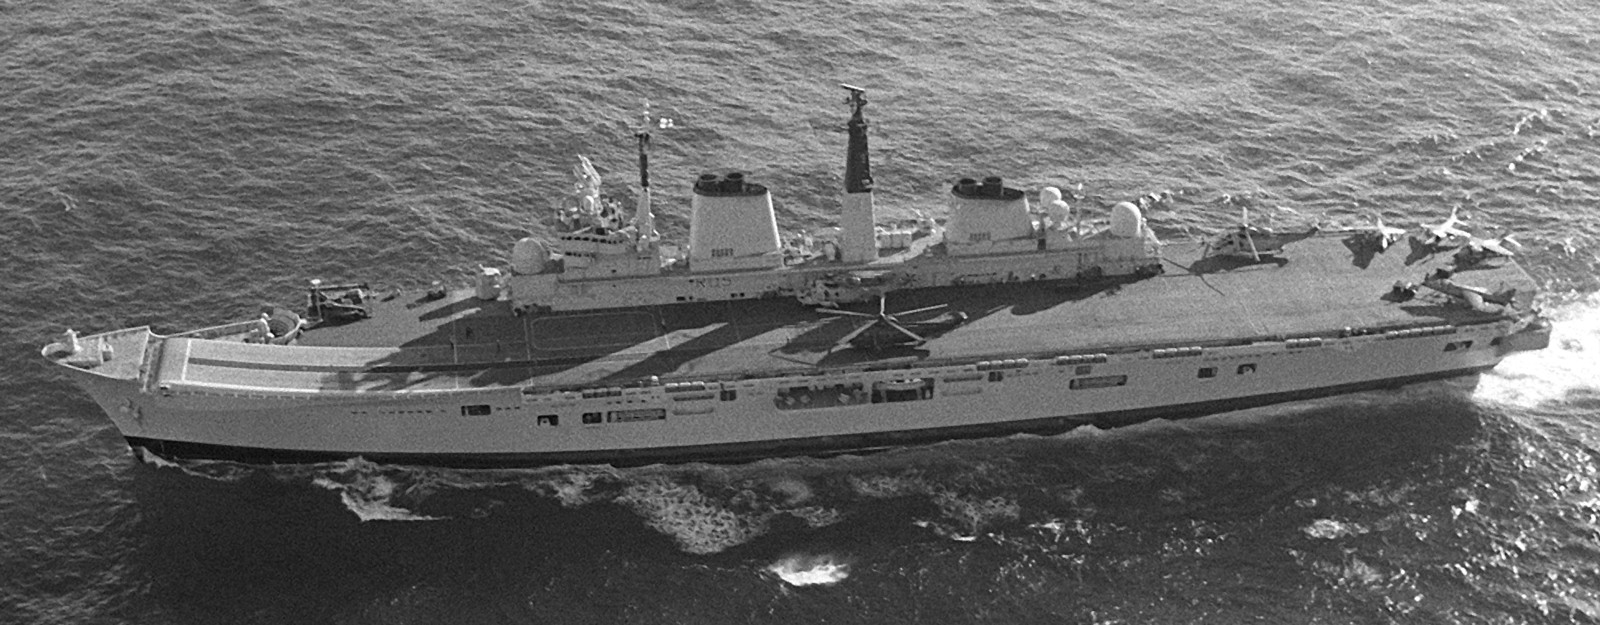 r-05 hms invincible class aircraft carrier royal navy 05